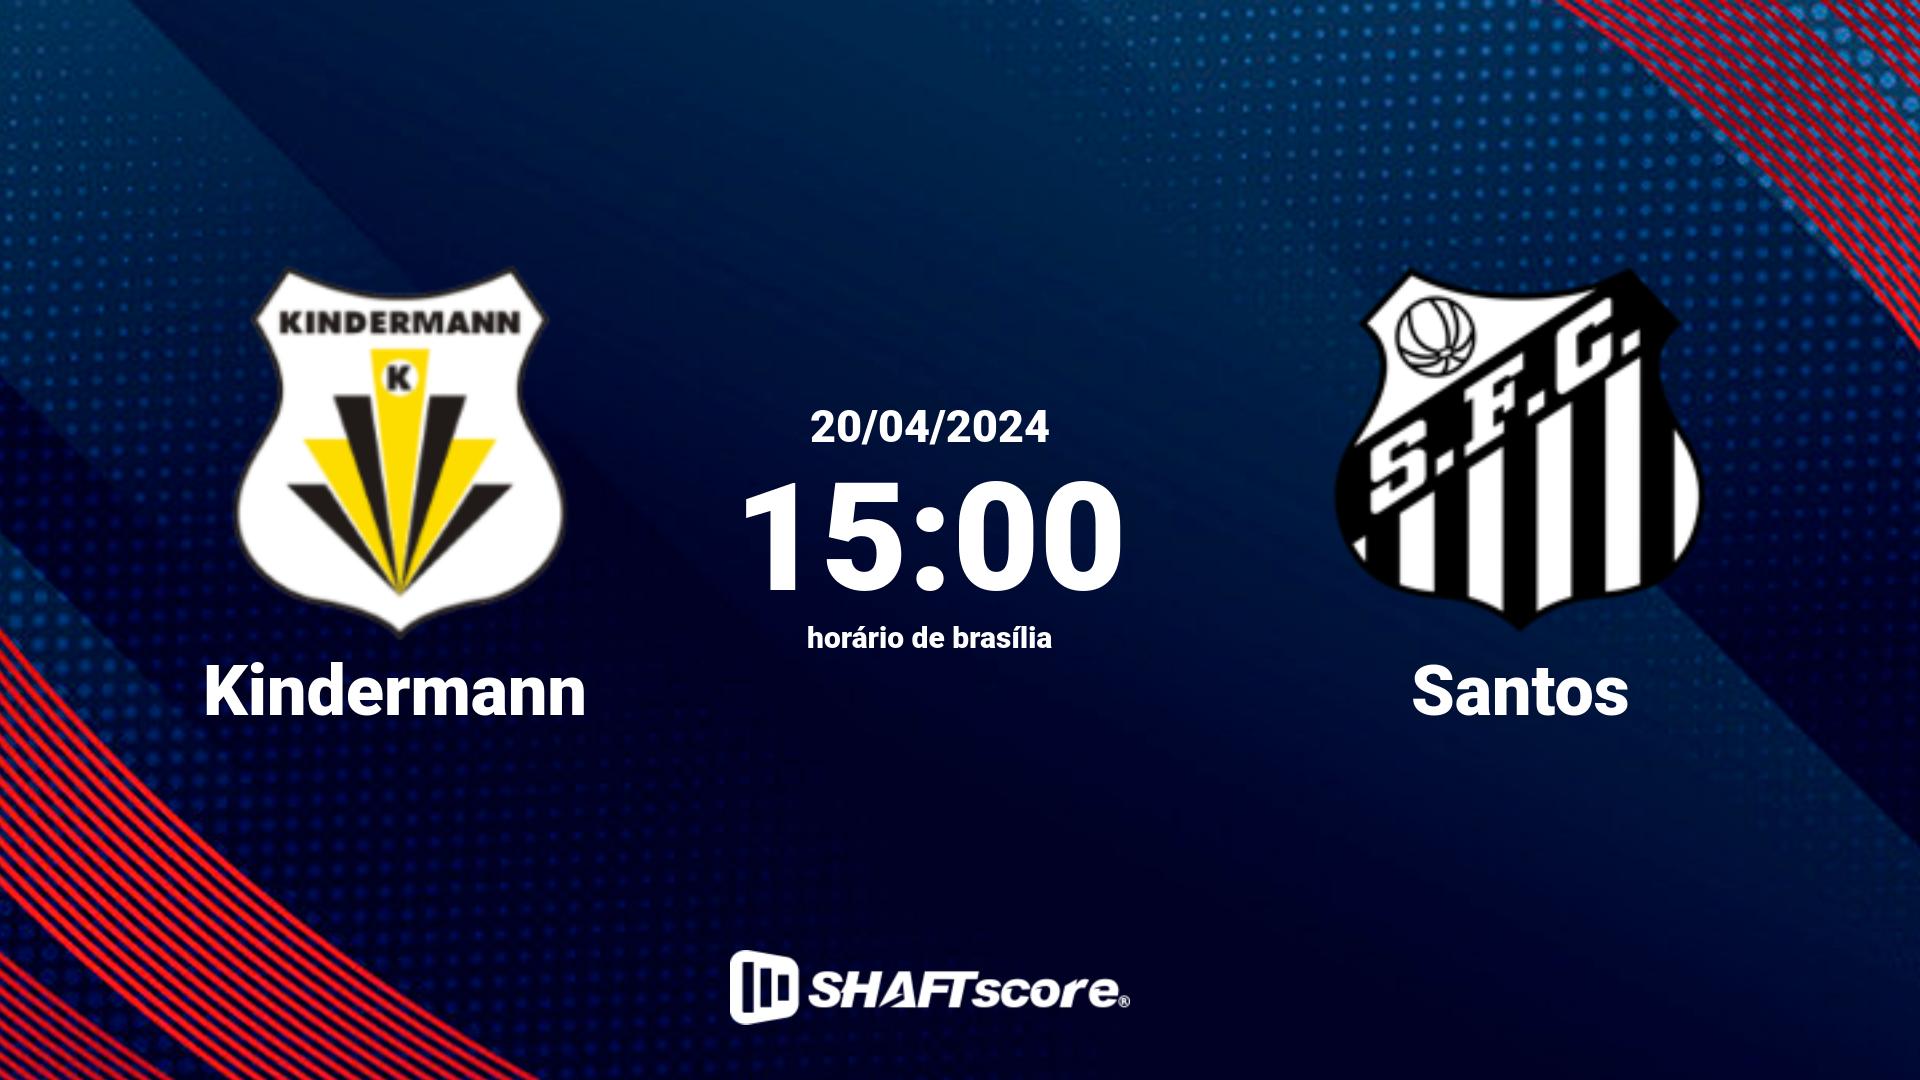 Estatísticas do jogo Kindermann vs Santos 20.04 15:00